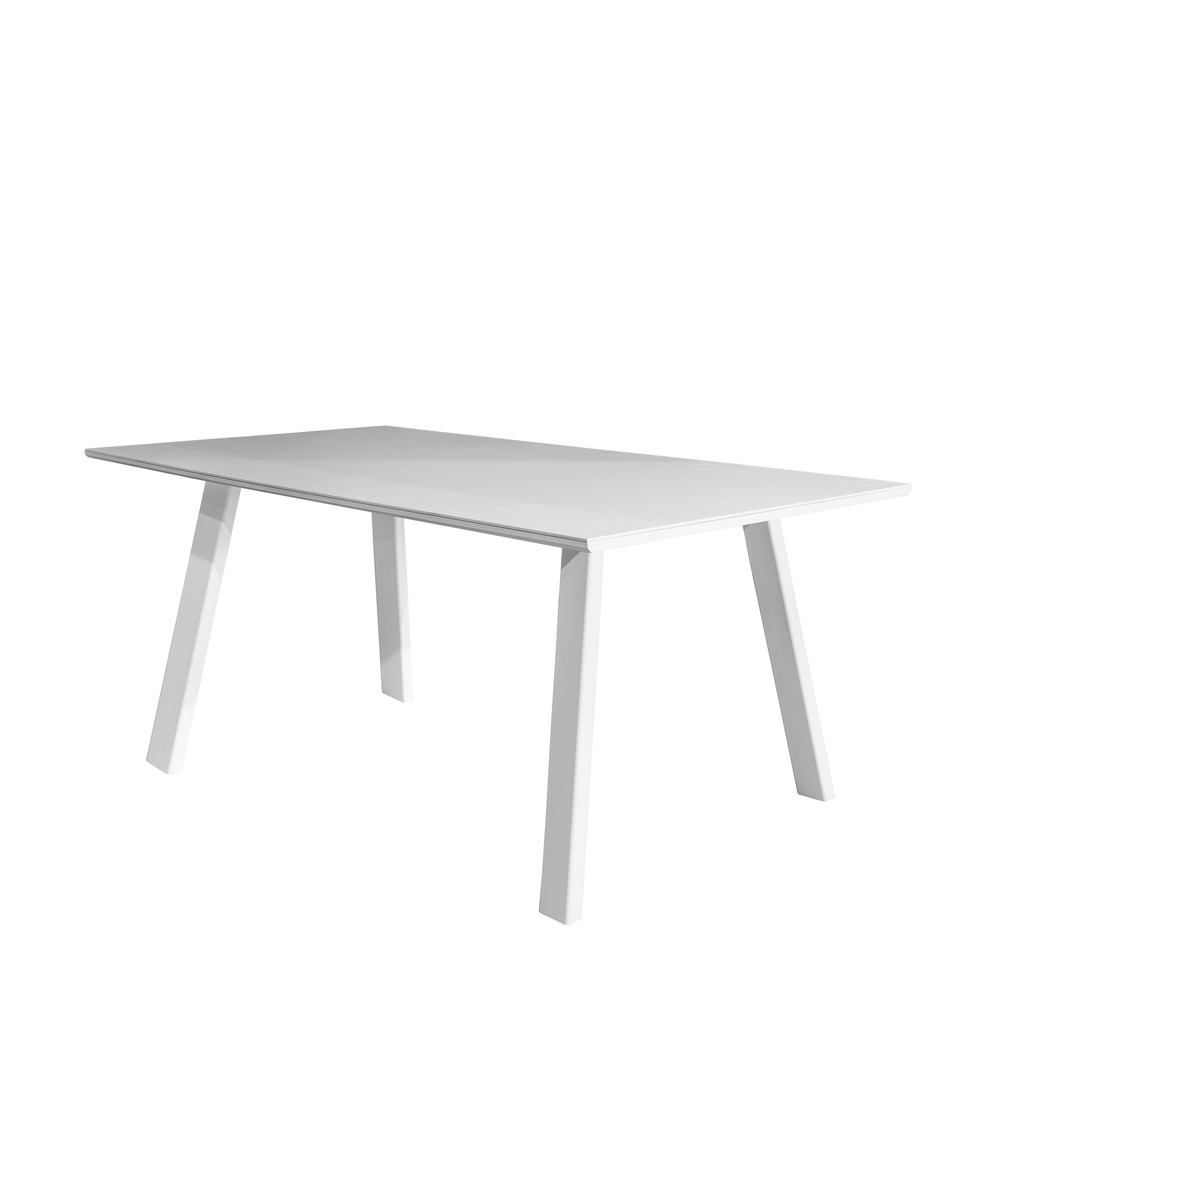   Table Spisa T01 Chic rectangle  140x100x75cm